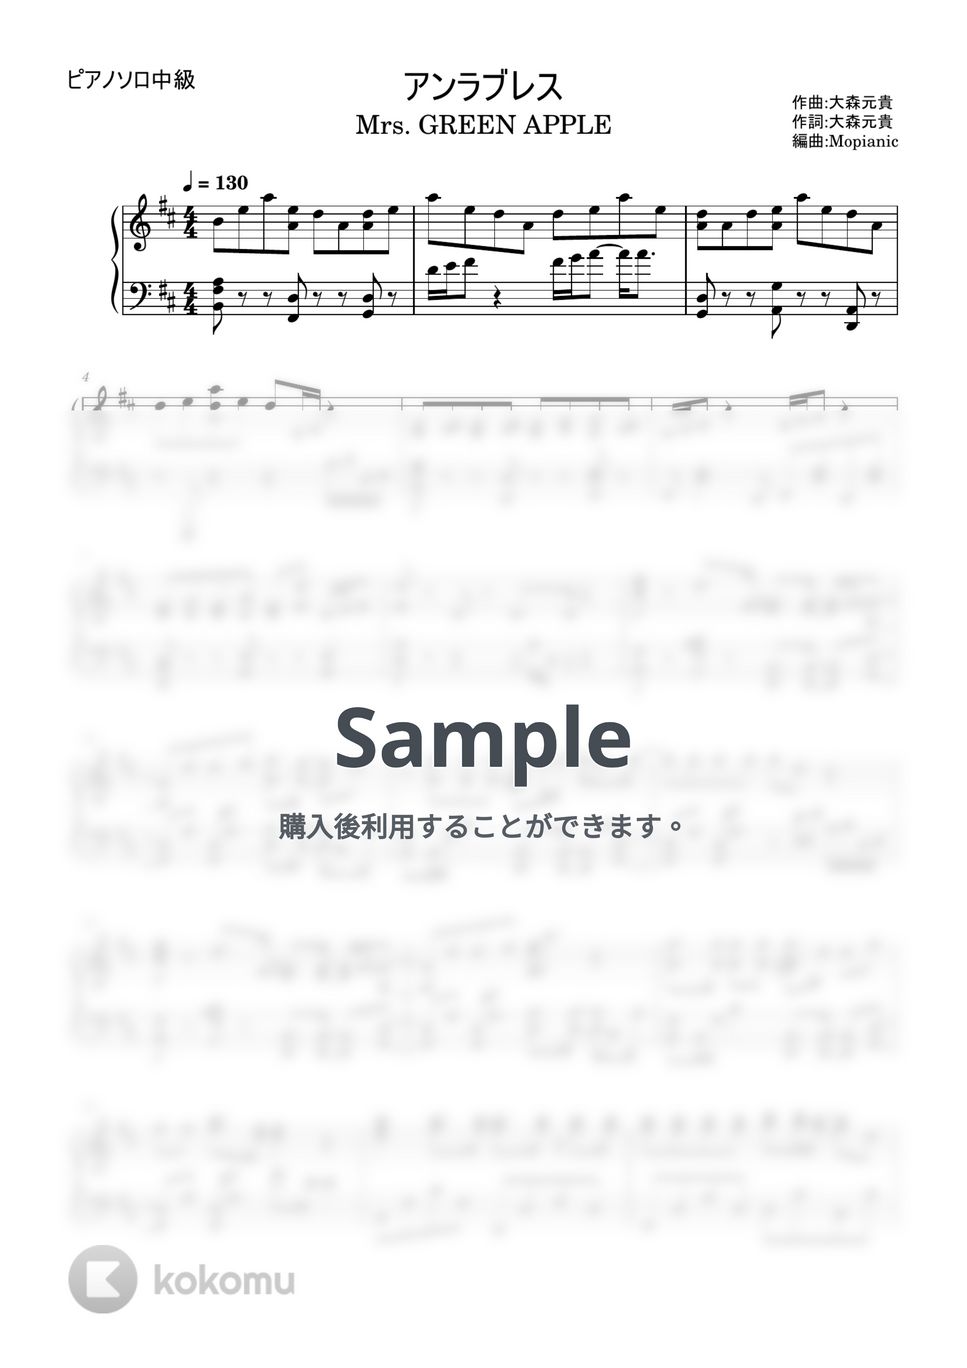 Mrs. GREEN APPLE - アンラブレス (intermediate, piano) by Mopianic